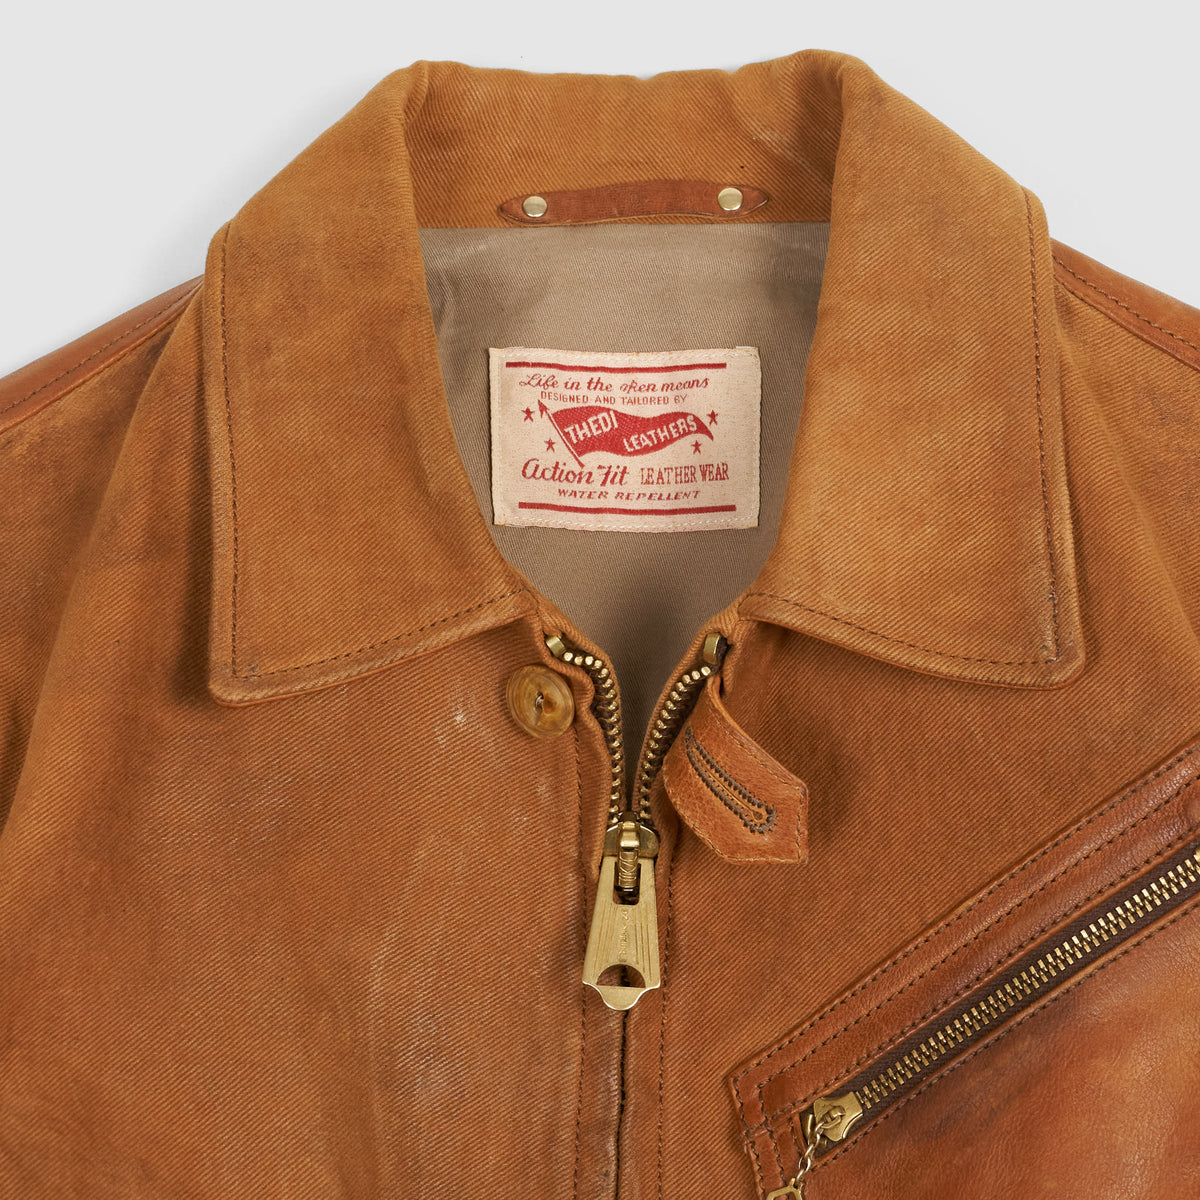 Thedi Leathers 2-Tone Canvas Buffalo Leather Jacket - DeeCee style